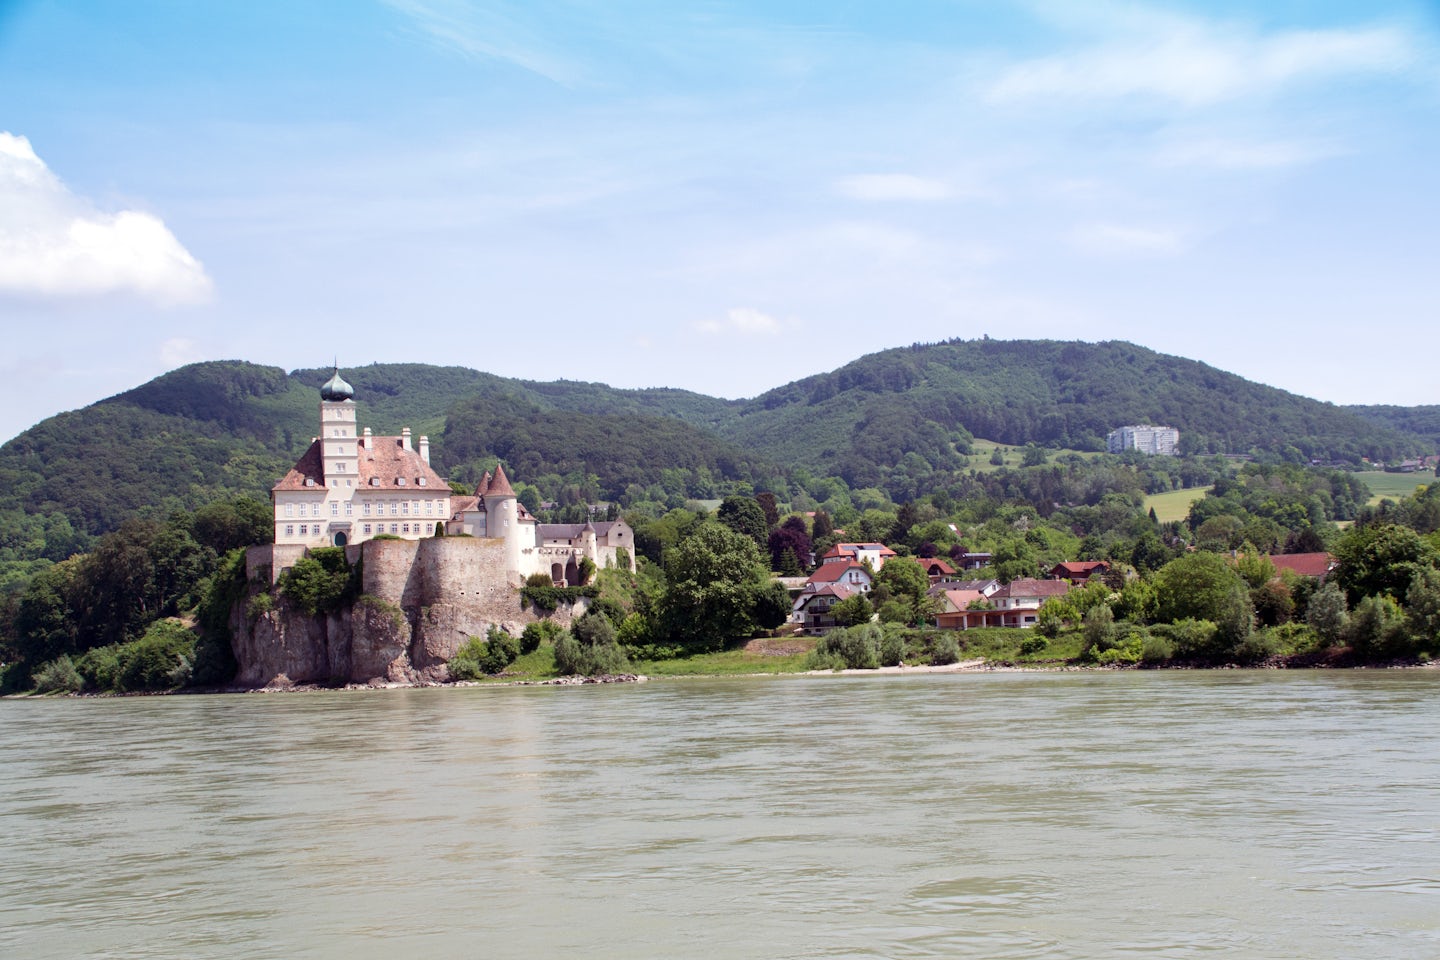 Cruising along the Danube from Melk to Durnstein.